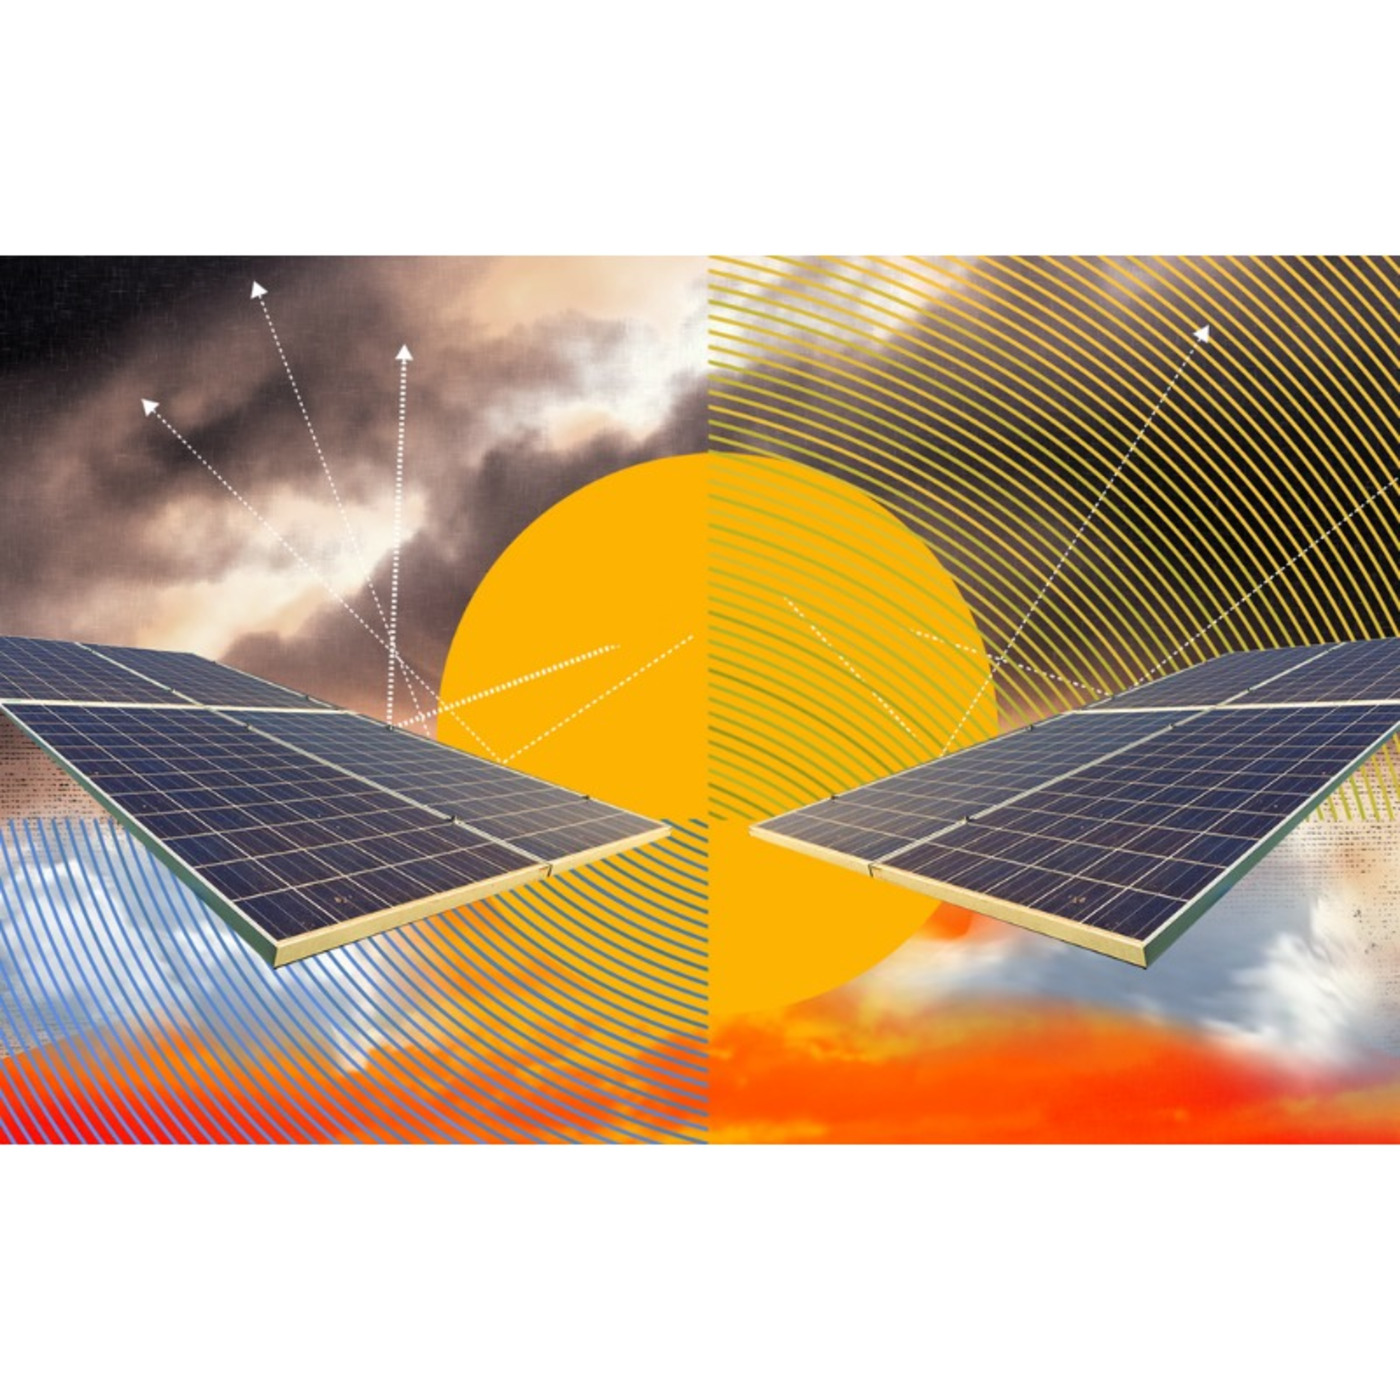 Episode 233: “An Idea Born of Desperation”: Simon Nicholson on Solar Radiation Management